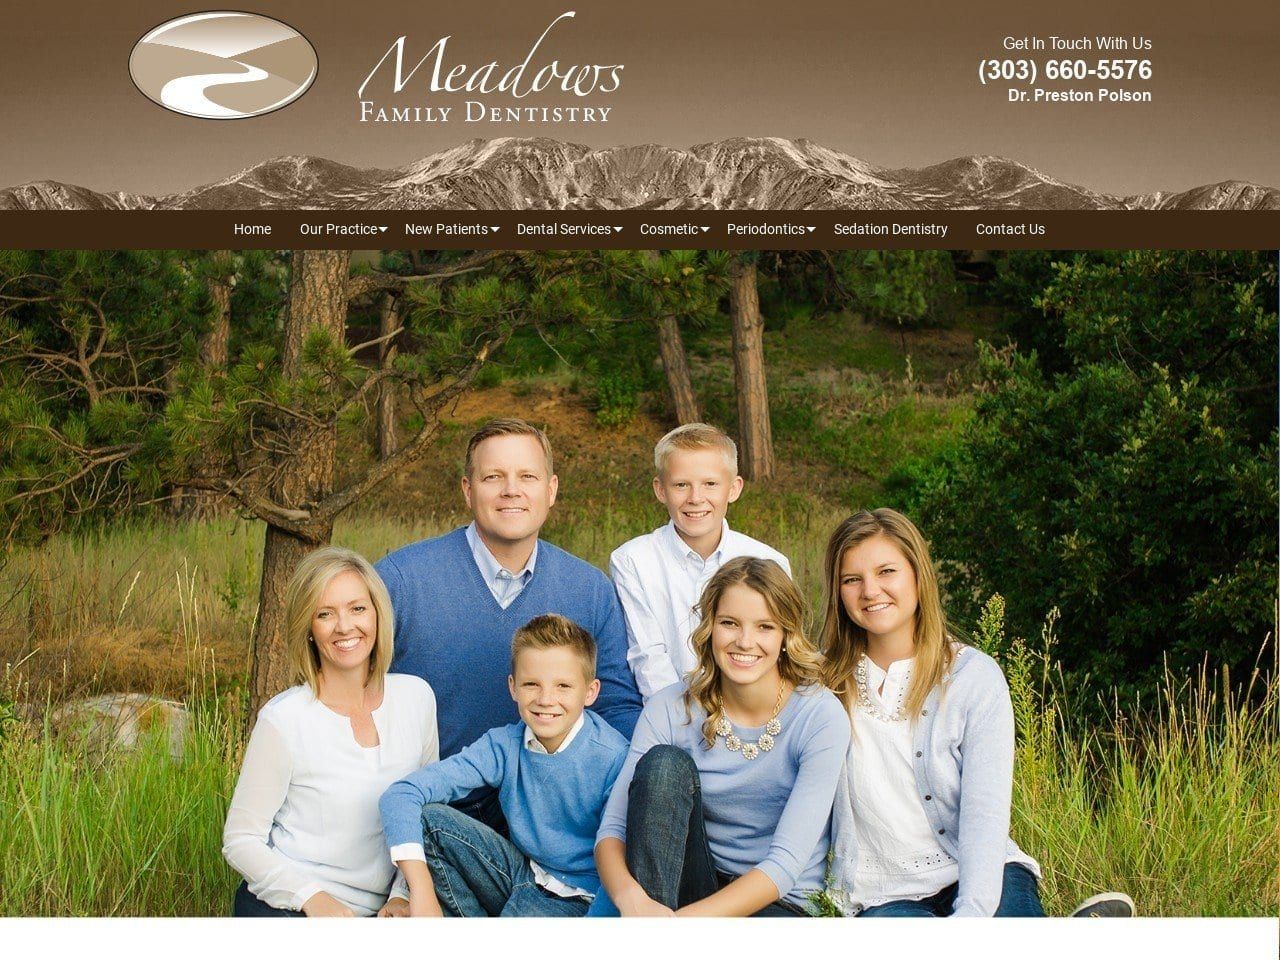 Meadows Family Dentistry Dr Preston H. Polson Website Screenshot from meadowsfamilydentistry.com